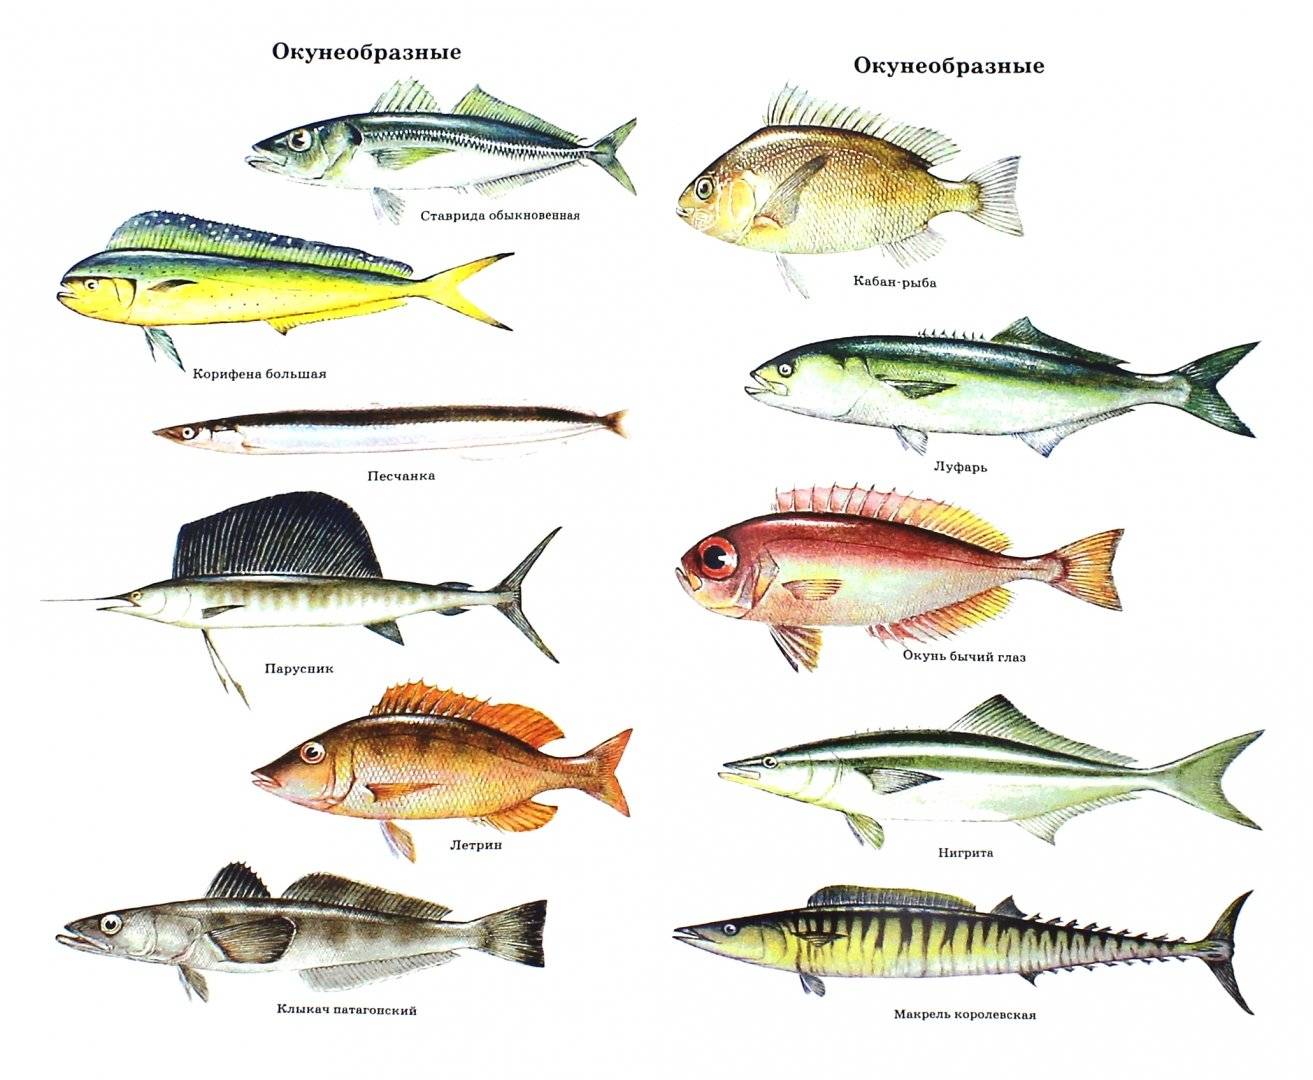 Описание и названия морских видов рыб